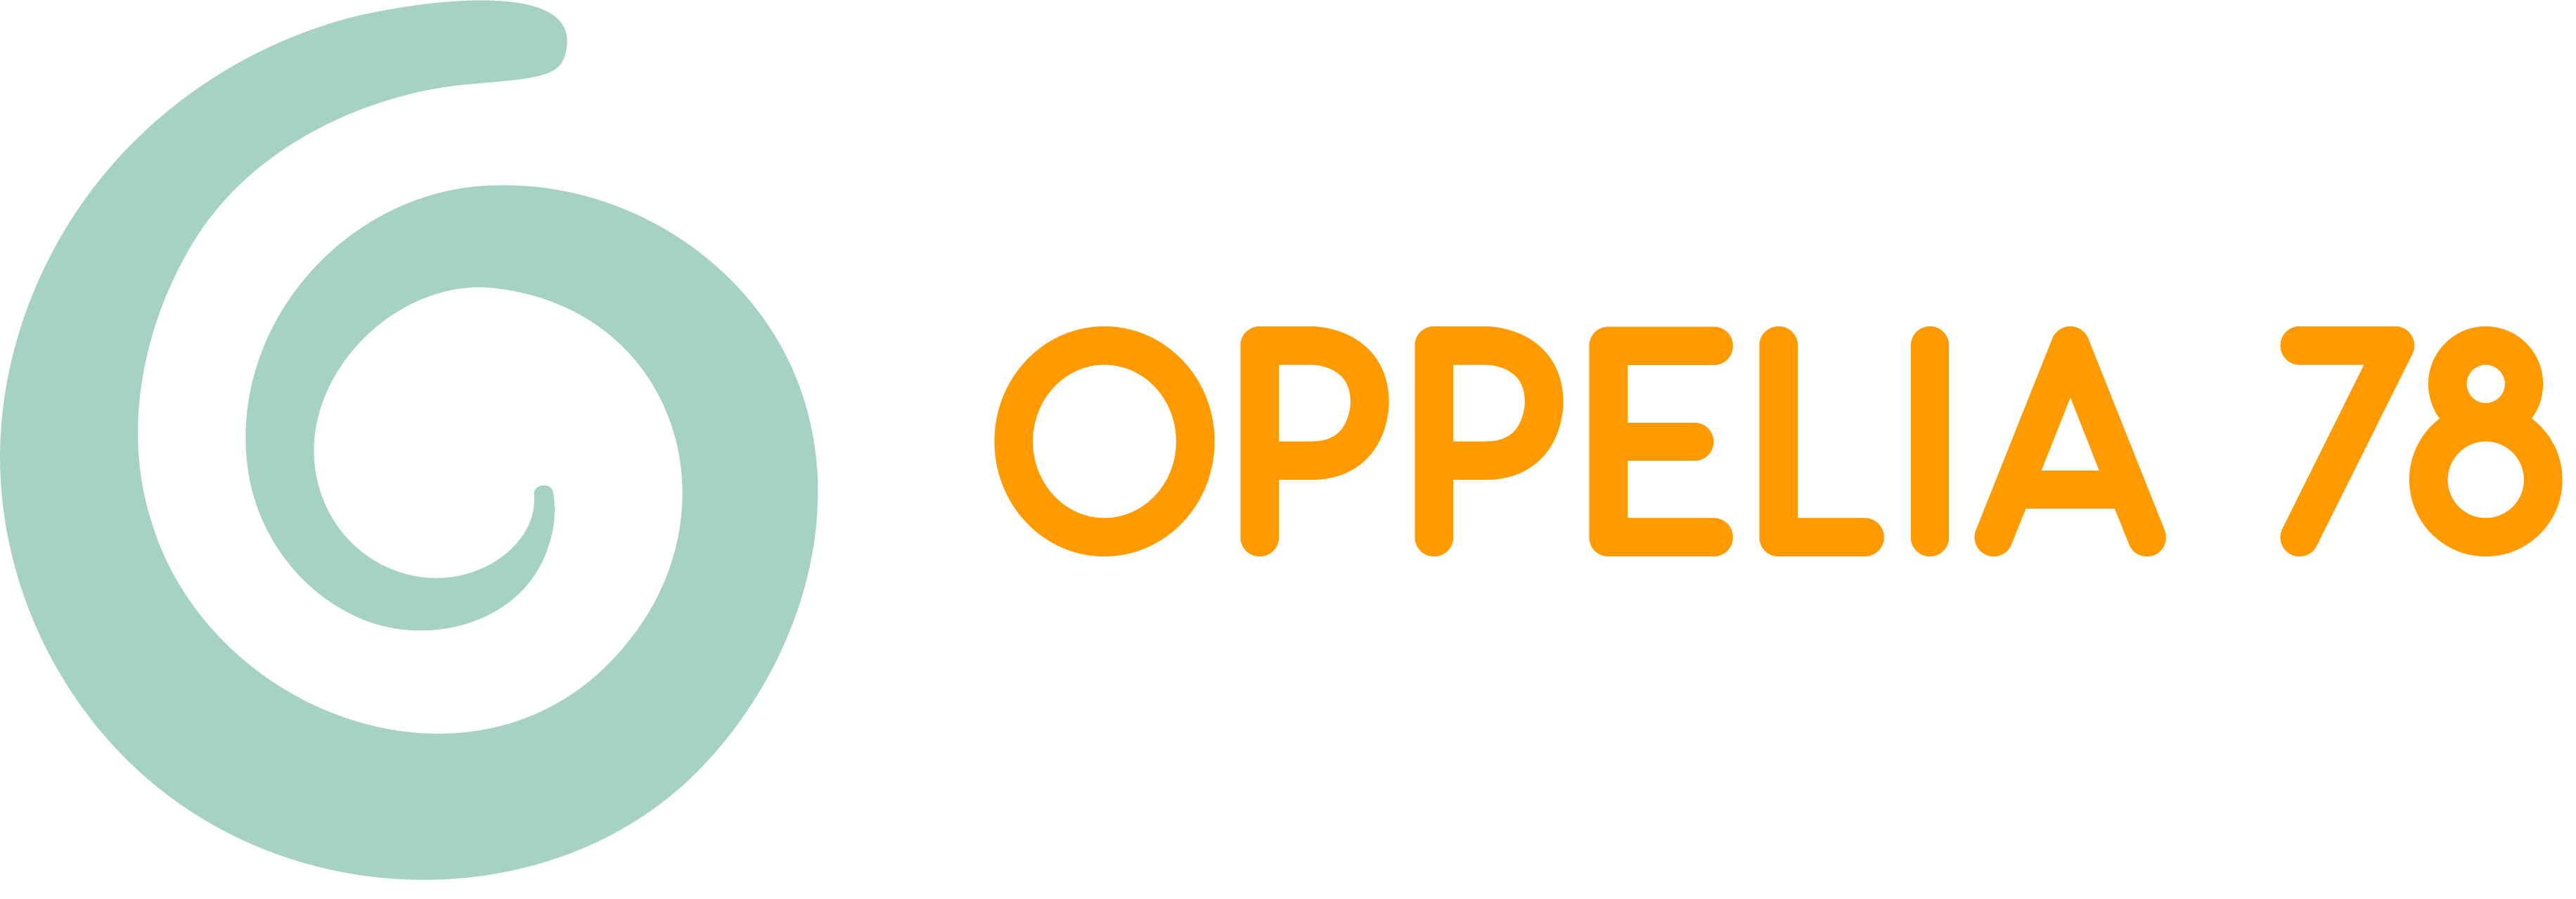 Oppelia-78-RVB.png